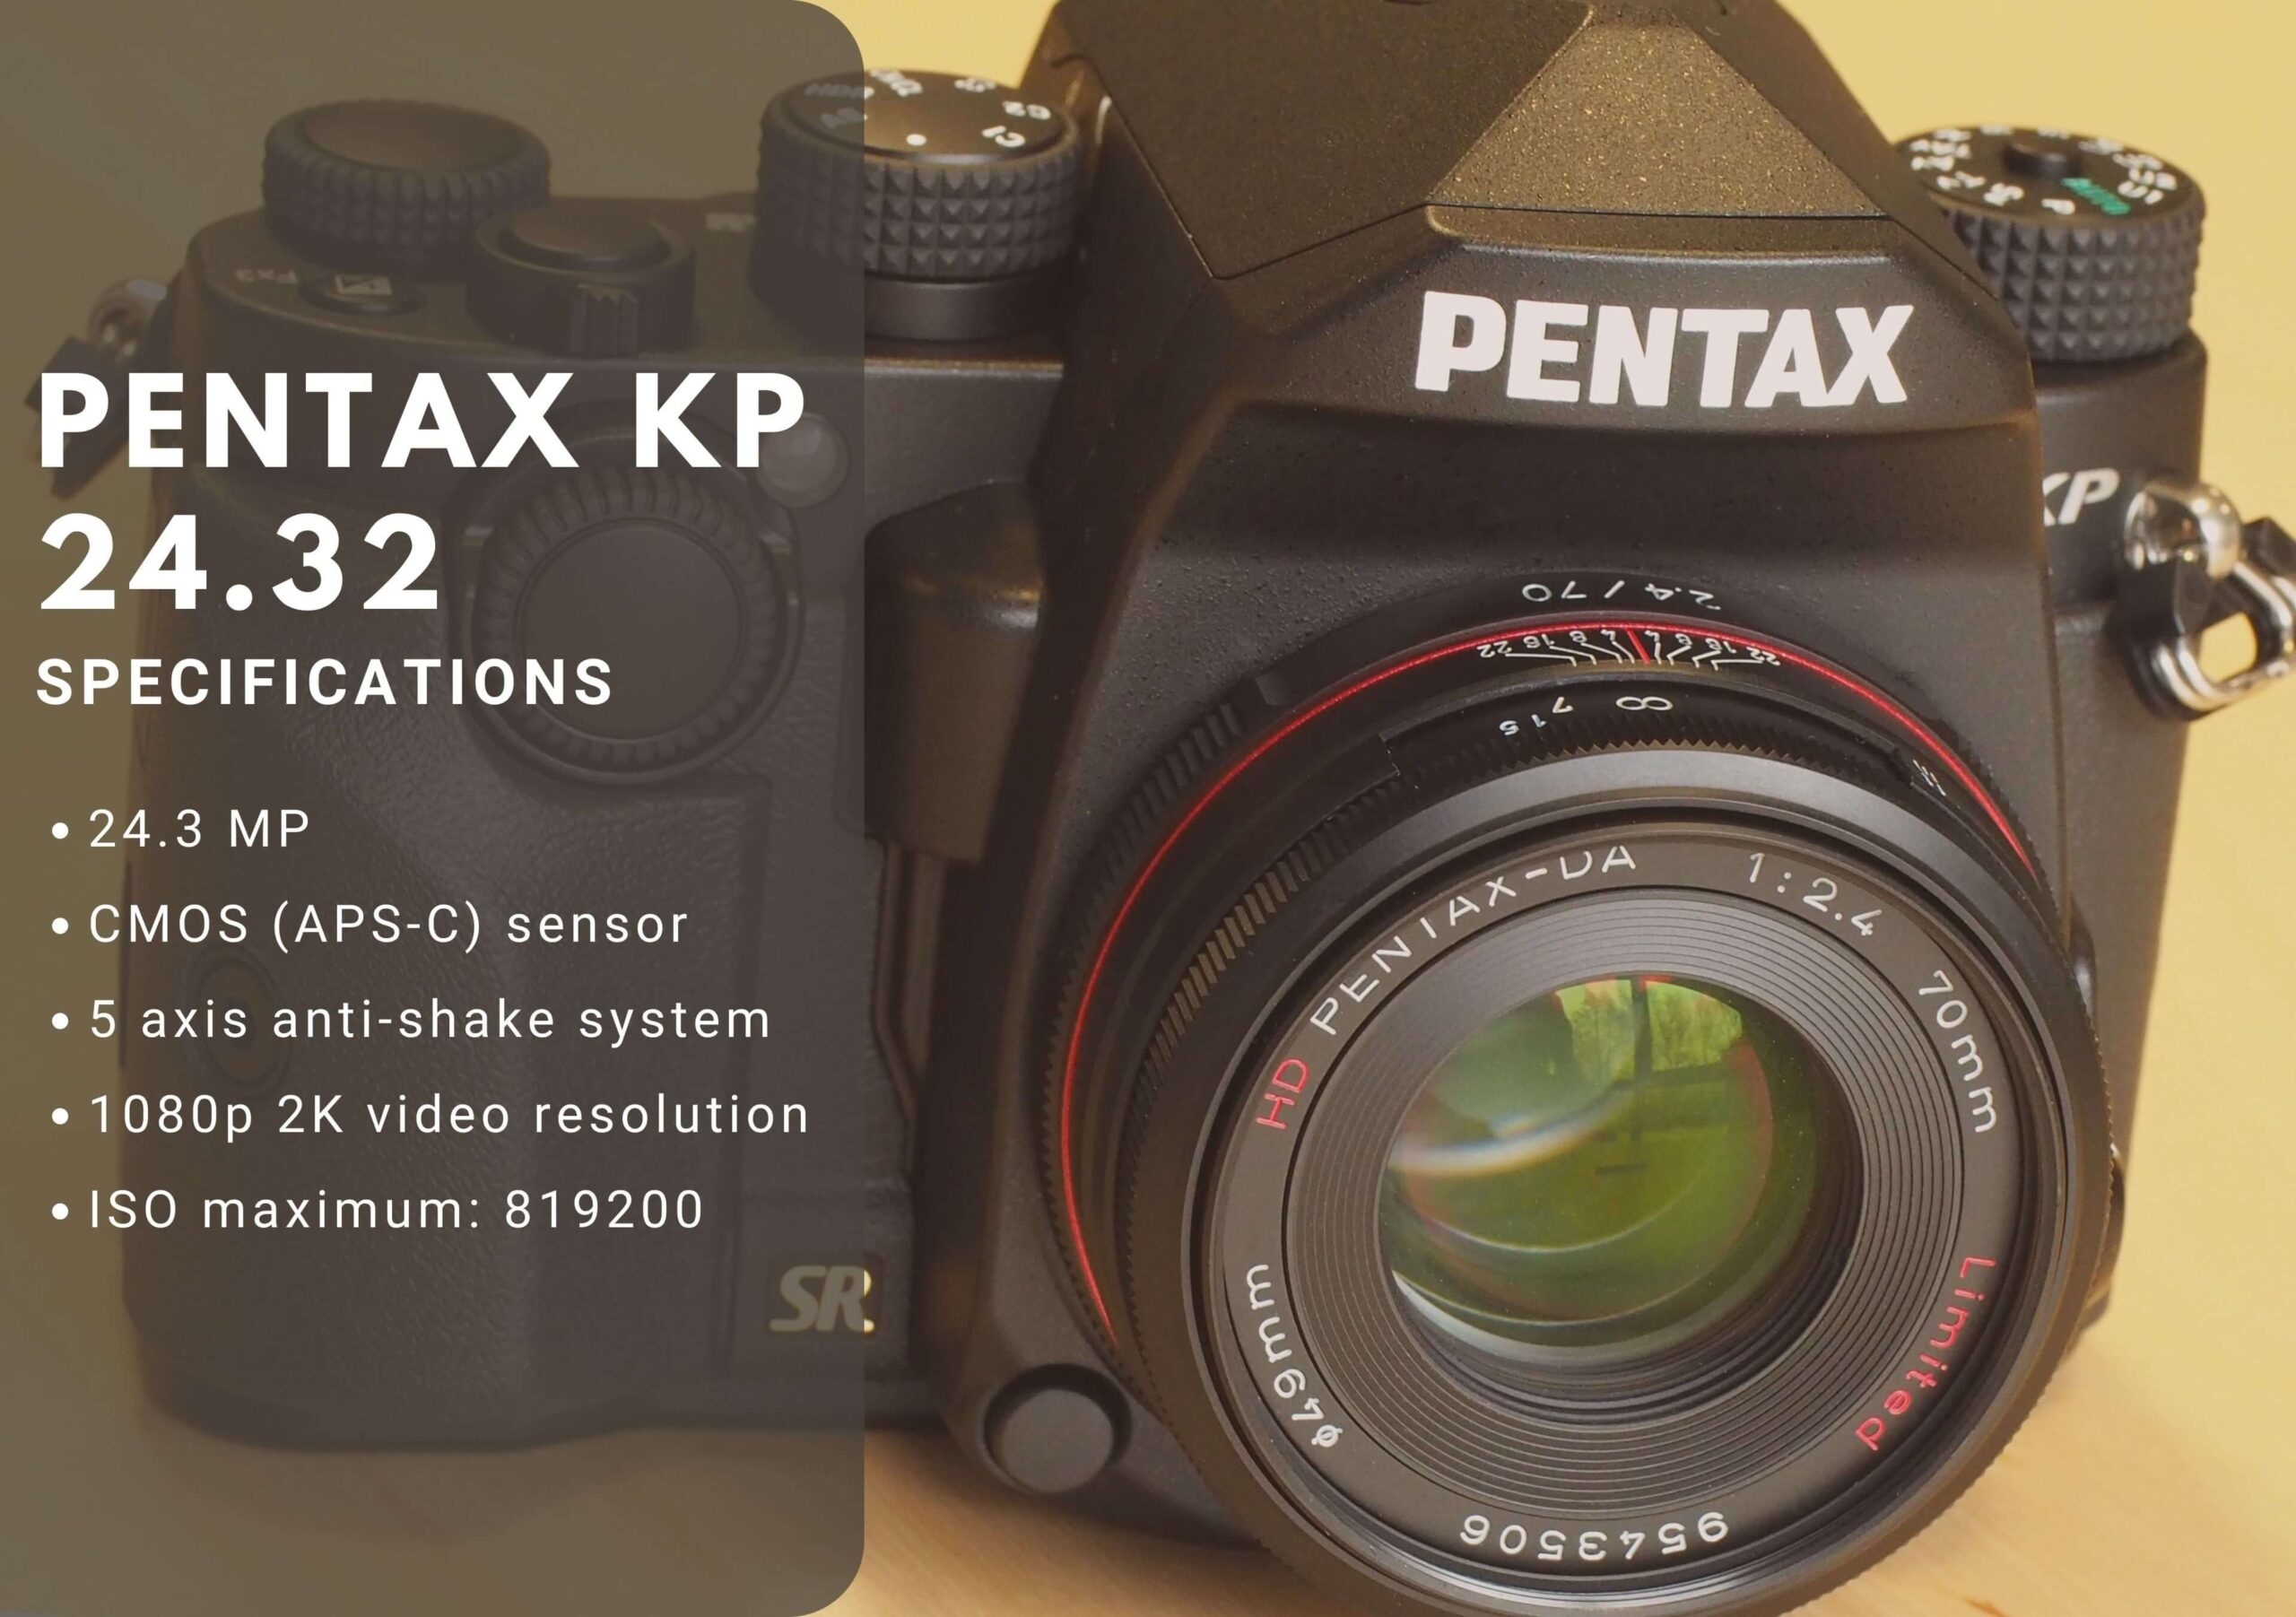 Pentax KP 24.32 scaled